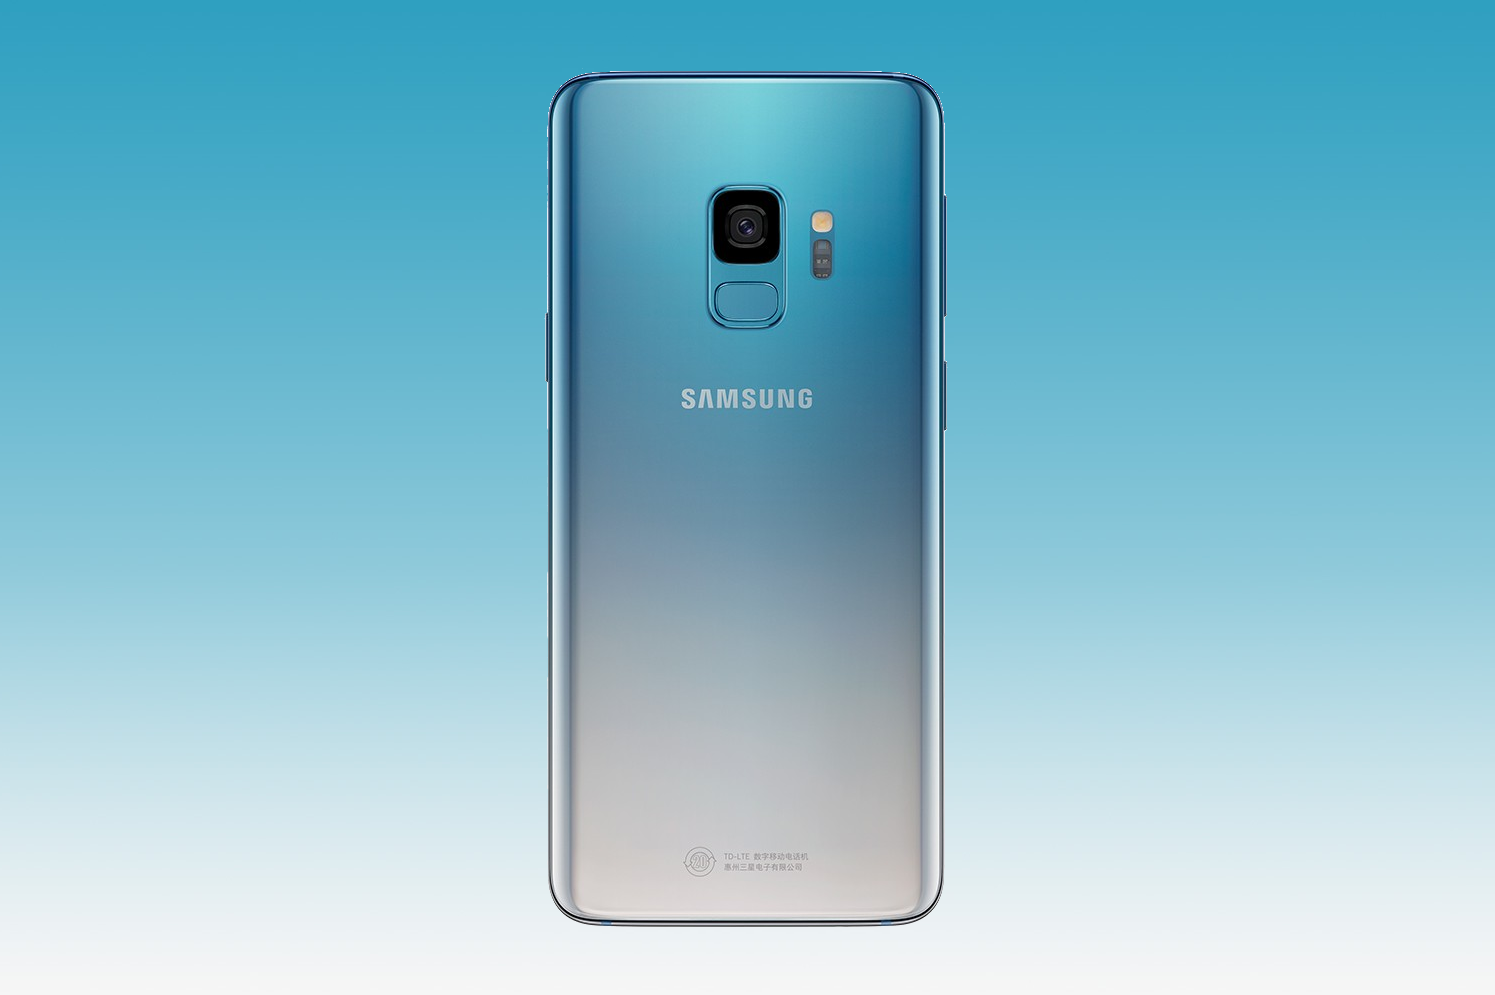 6 samsung galaxy s9. Samsung Galaxy s9. Samsung Galaxy s9 Blue. Самсунг галакси с 9. Samsung Galaxy s9 Plus.